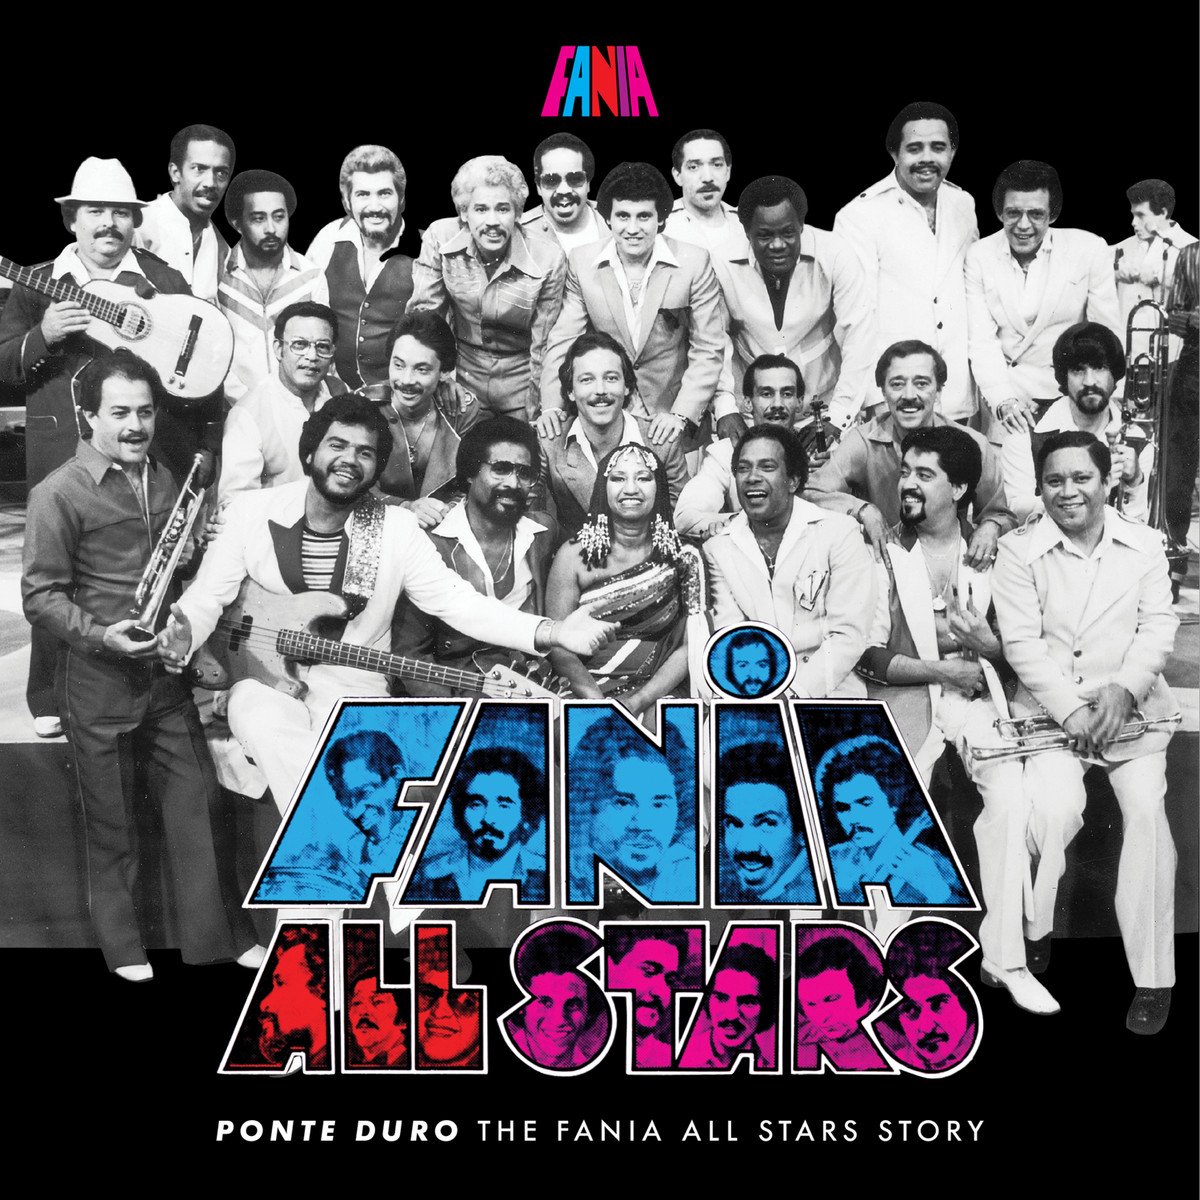 Fania All Stars - Ponte Duro The Fania All Stars Story Artwork (1 of 1) |  Last.fm